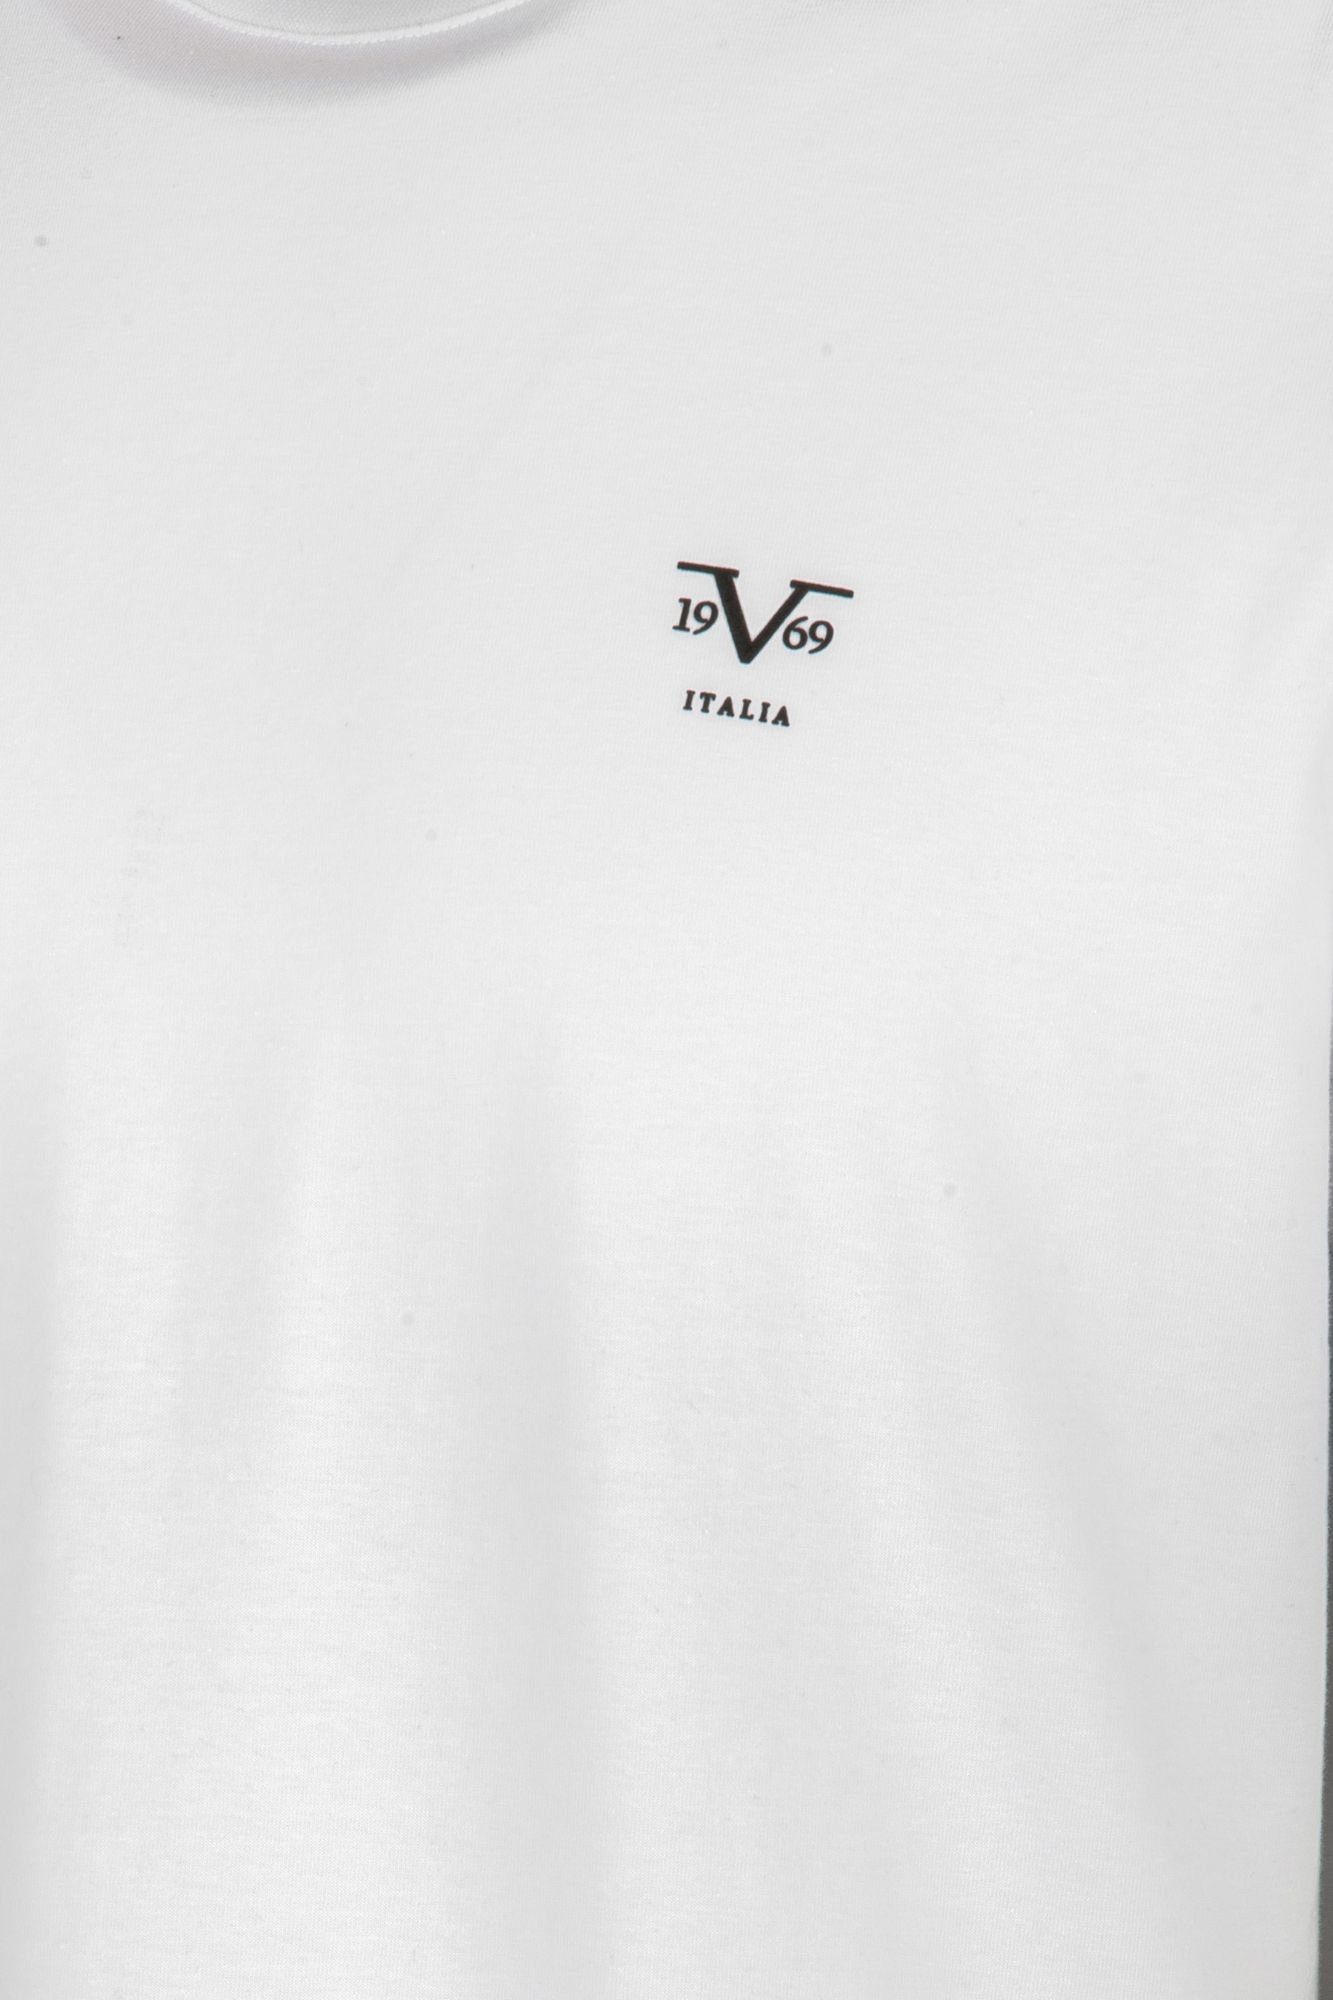 -037 Versace 19V69 by Luca Italia Rundhalsausschnitt T-Shirt